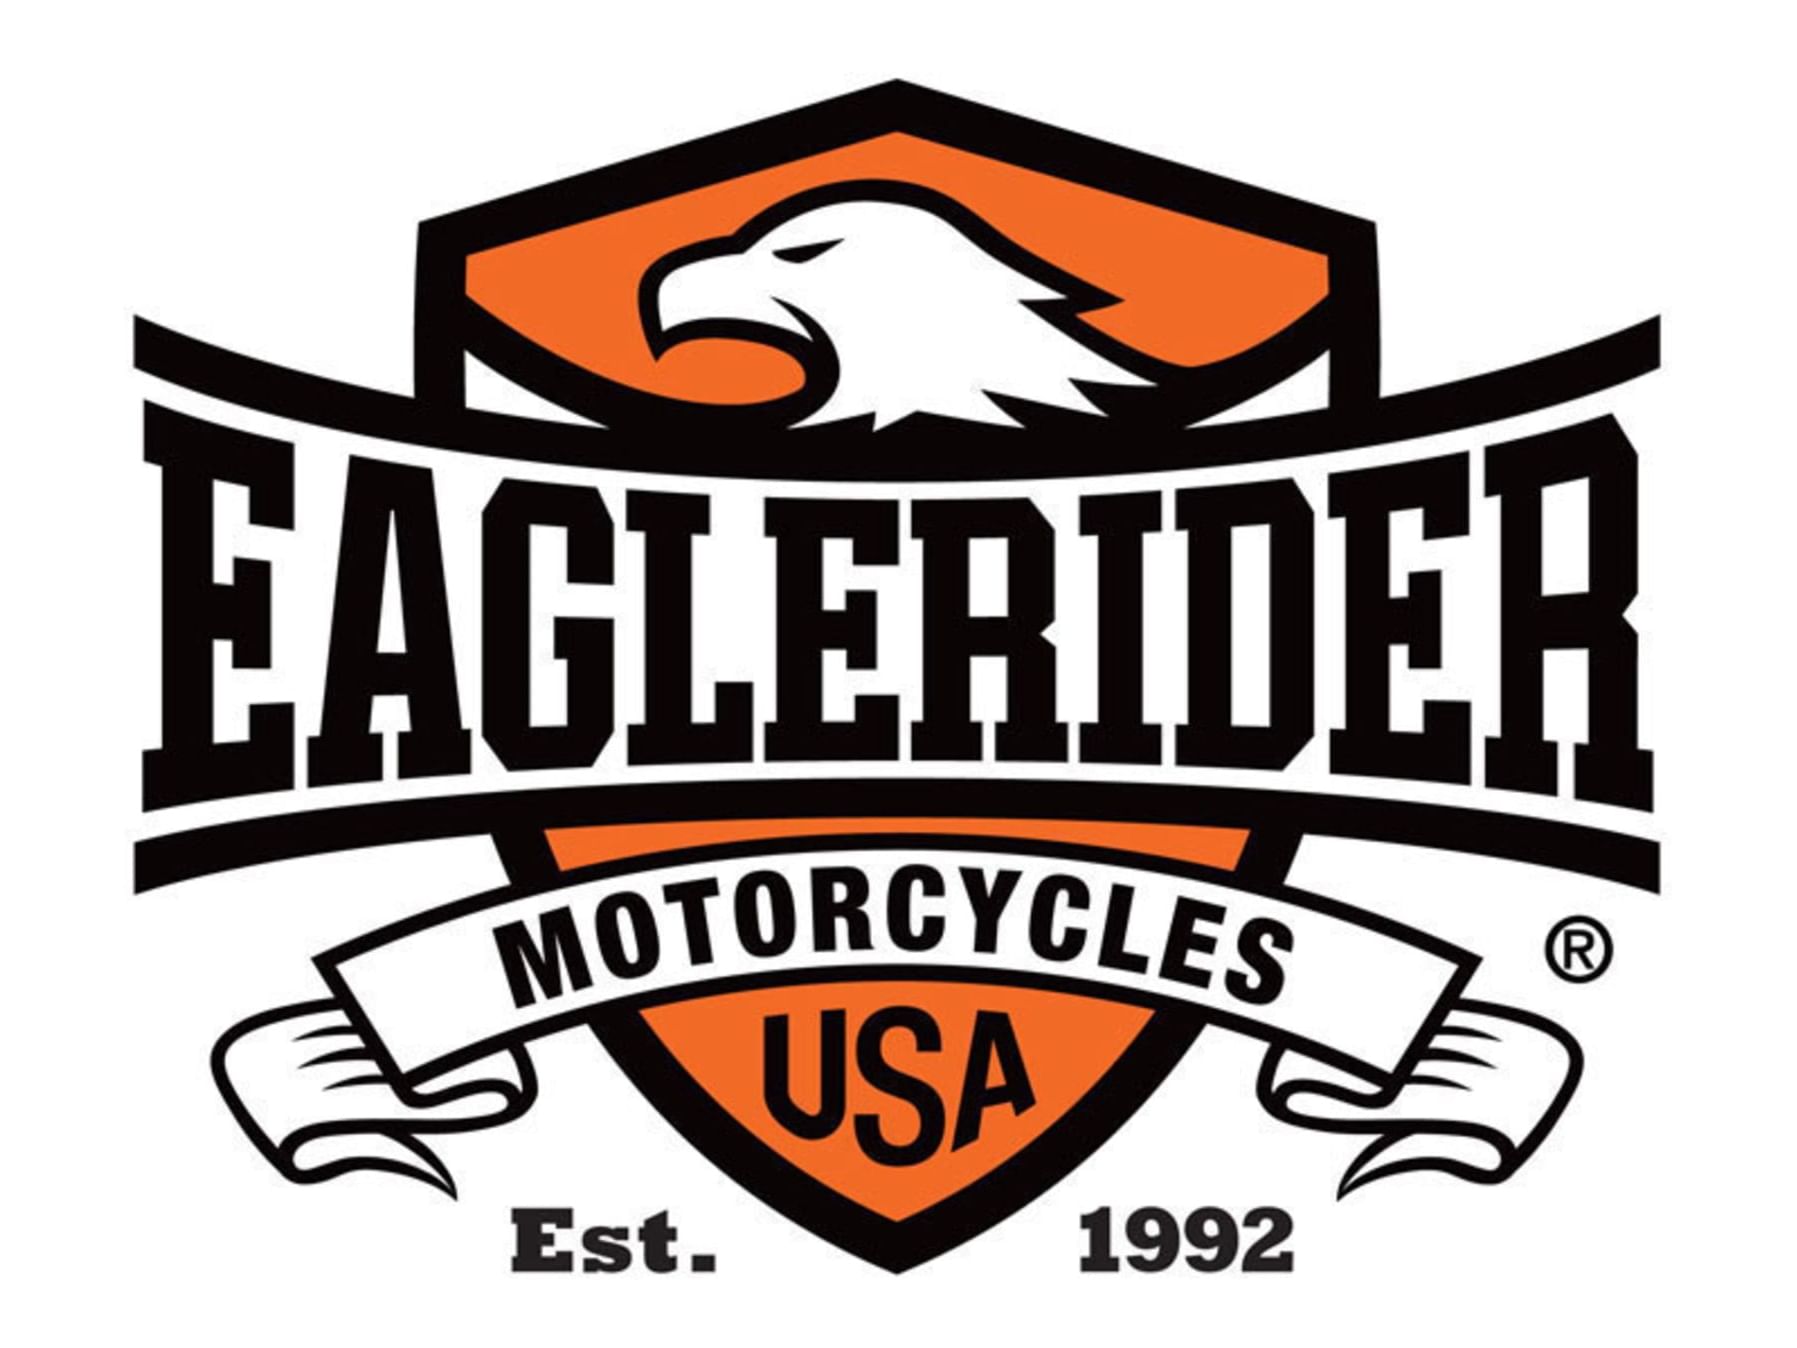 Logo for Eaglerider Motorcycles USA.